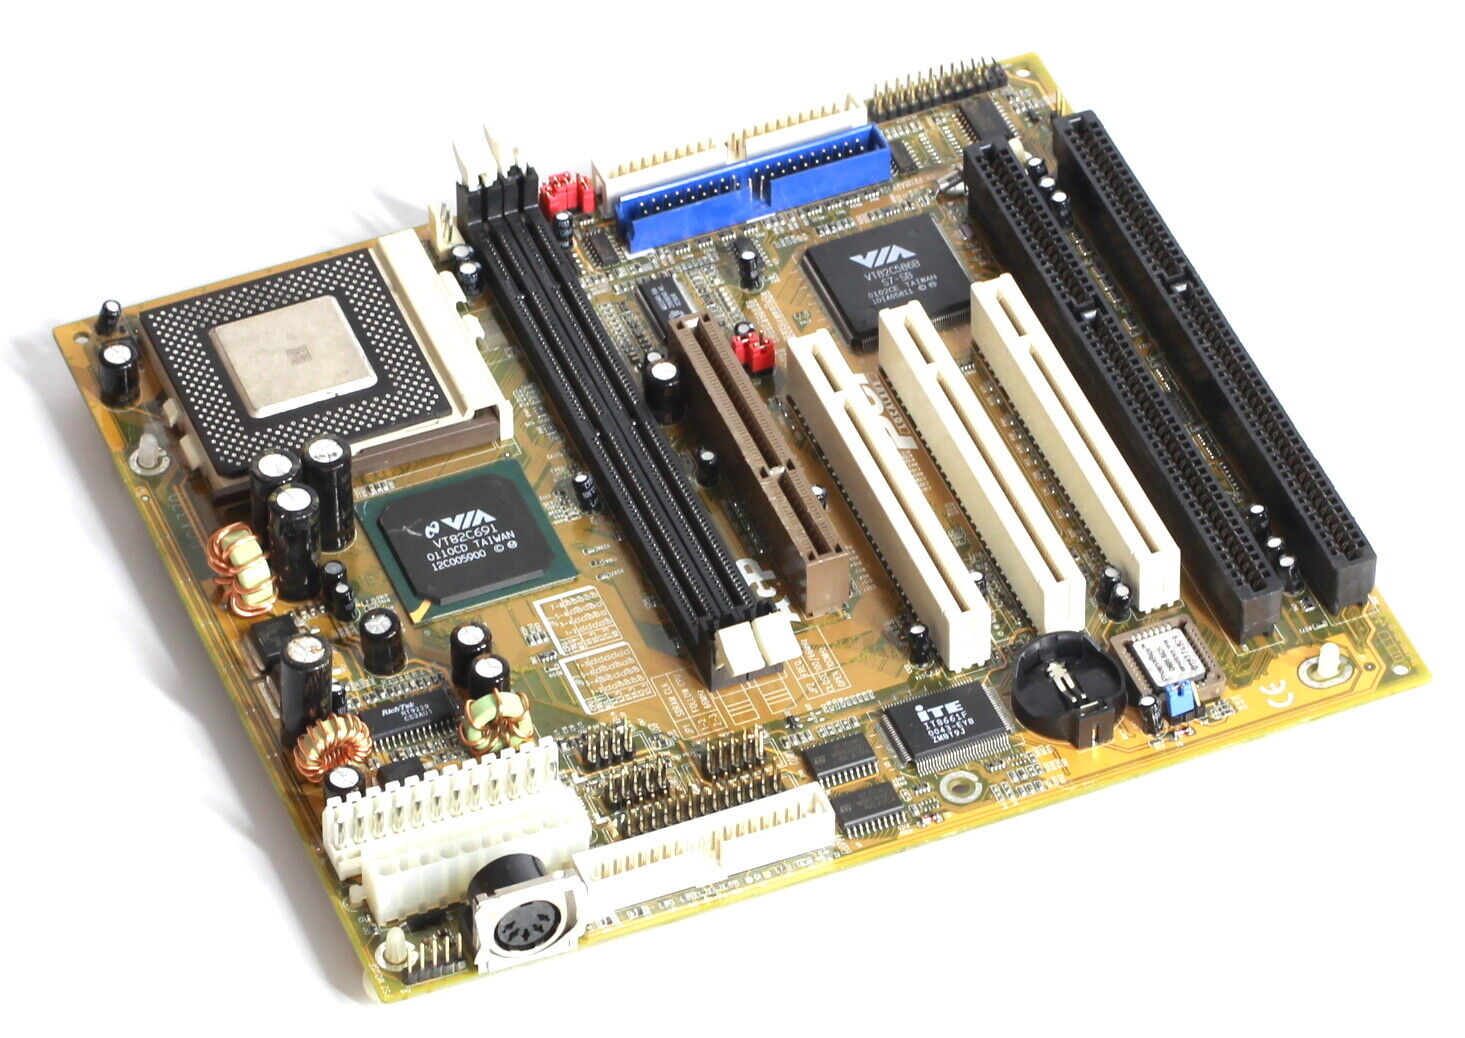 Socket 370 motherboard - PCPartner APBS3-C861 - Apollo Pro - TESTED